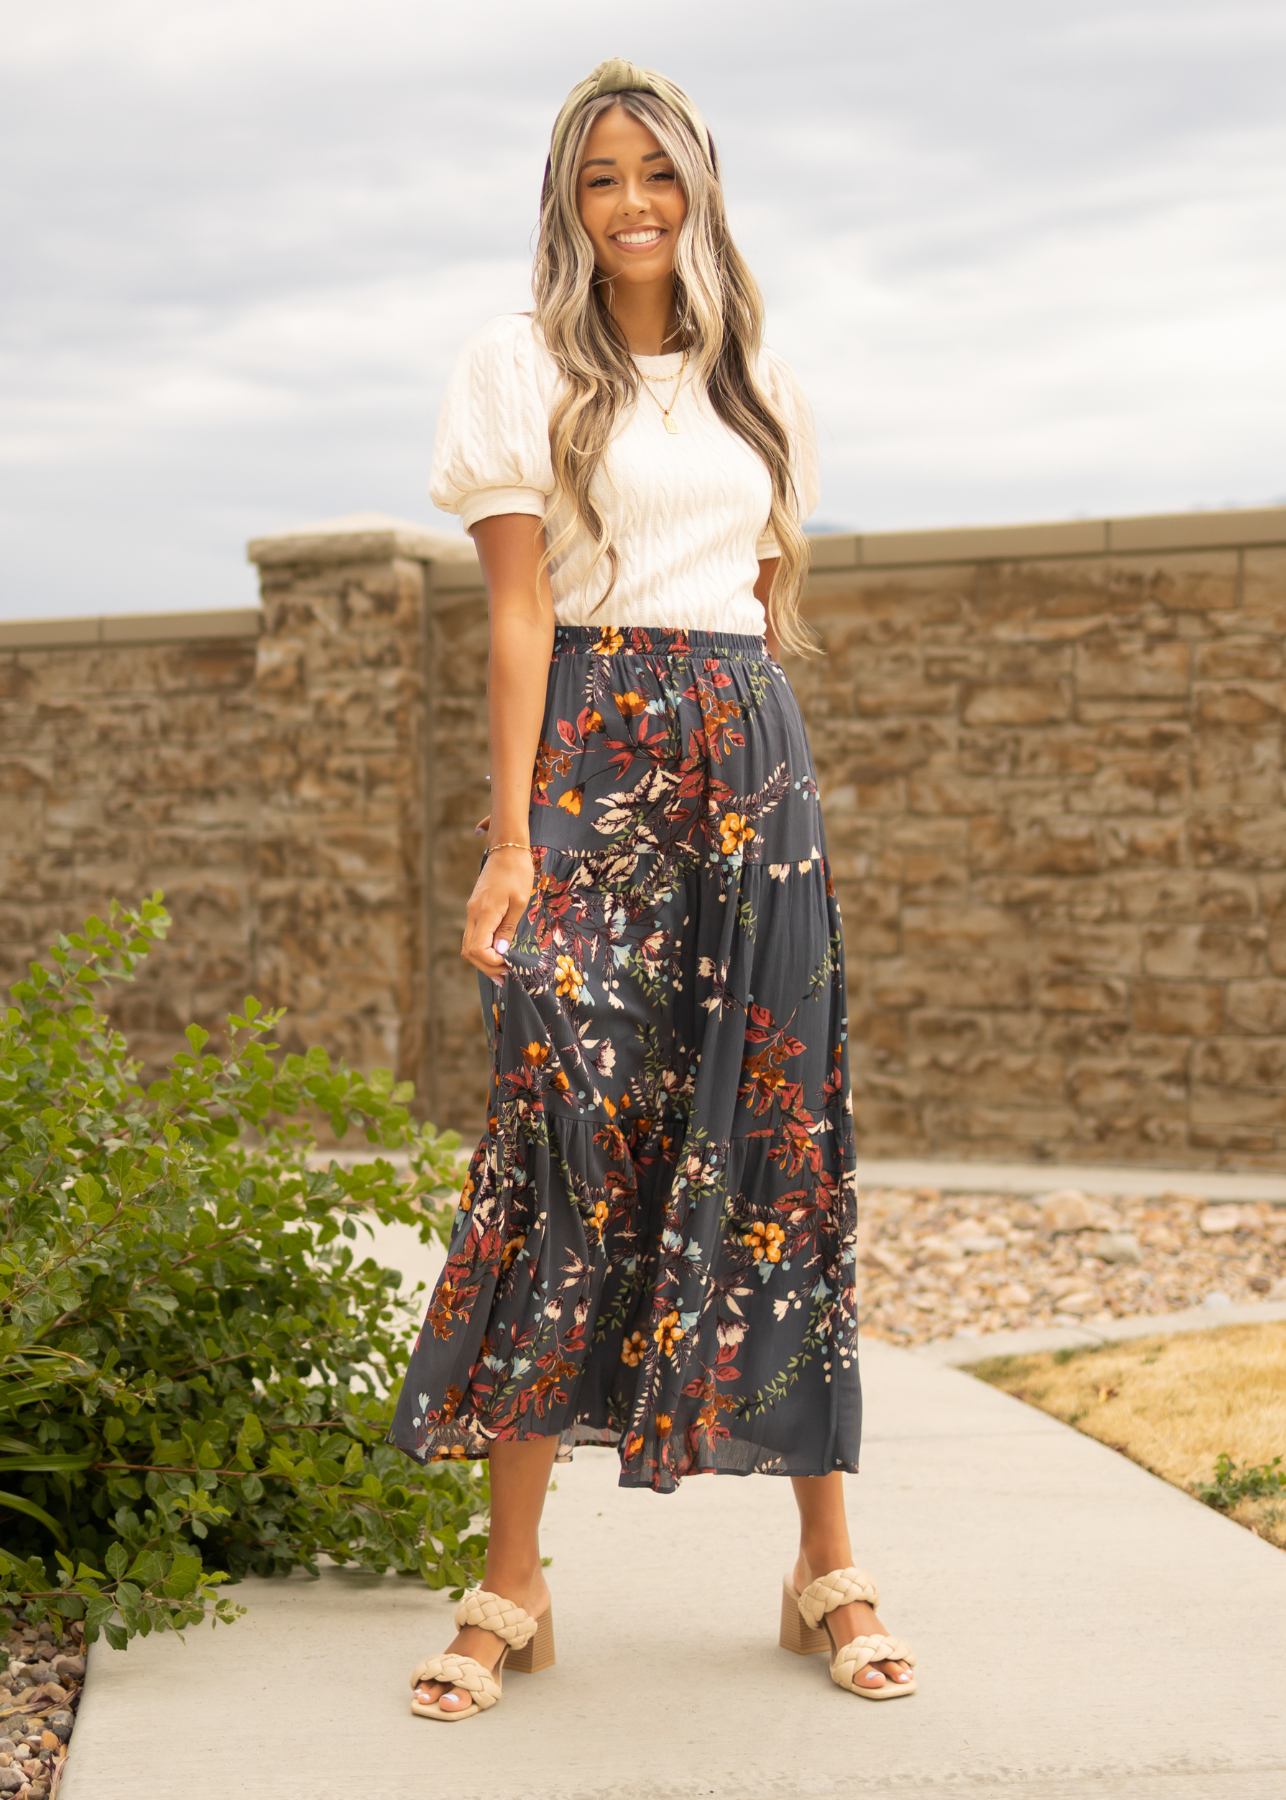 Long teal floral skirt